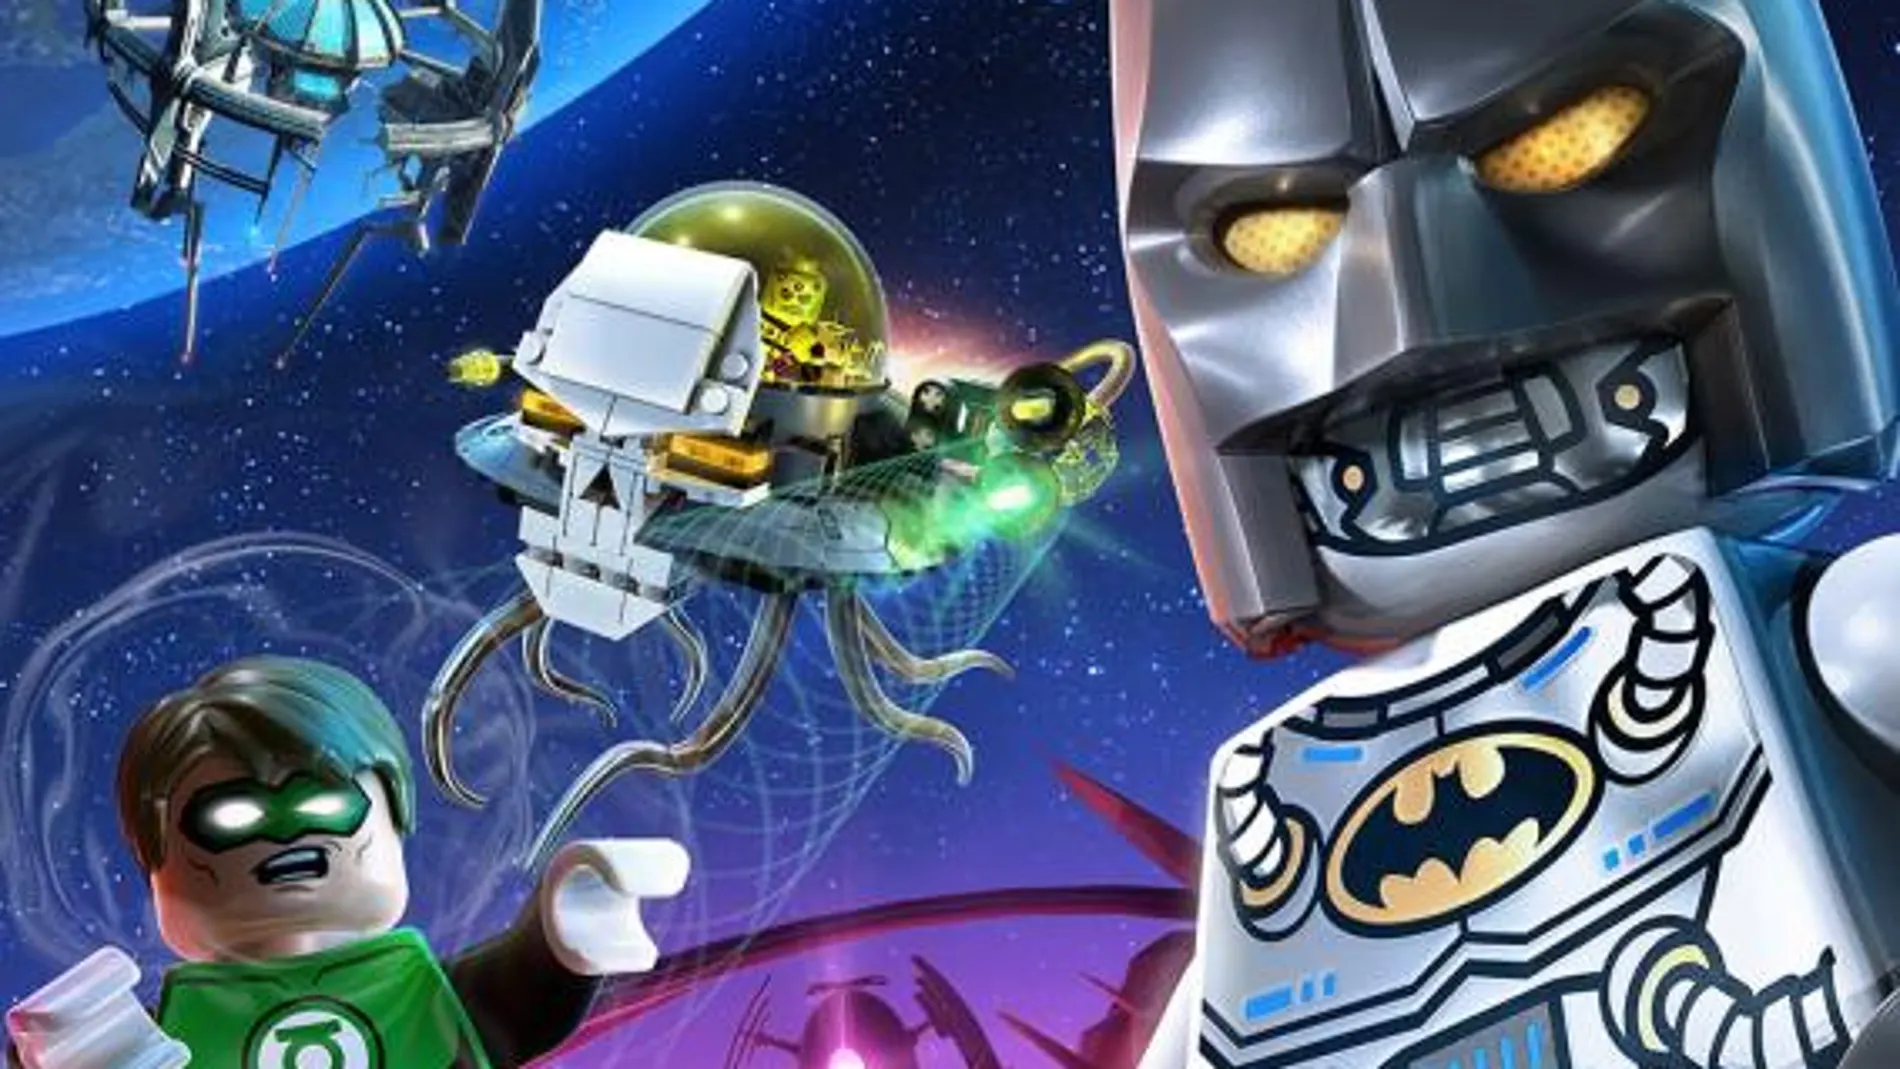 Lego Batman 3 nos llevará más allá de Gotham